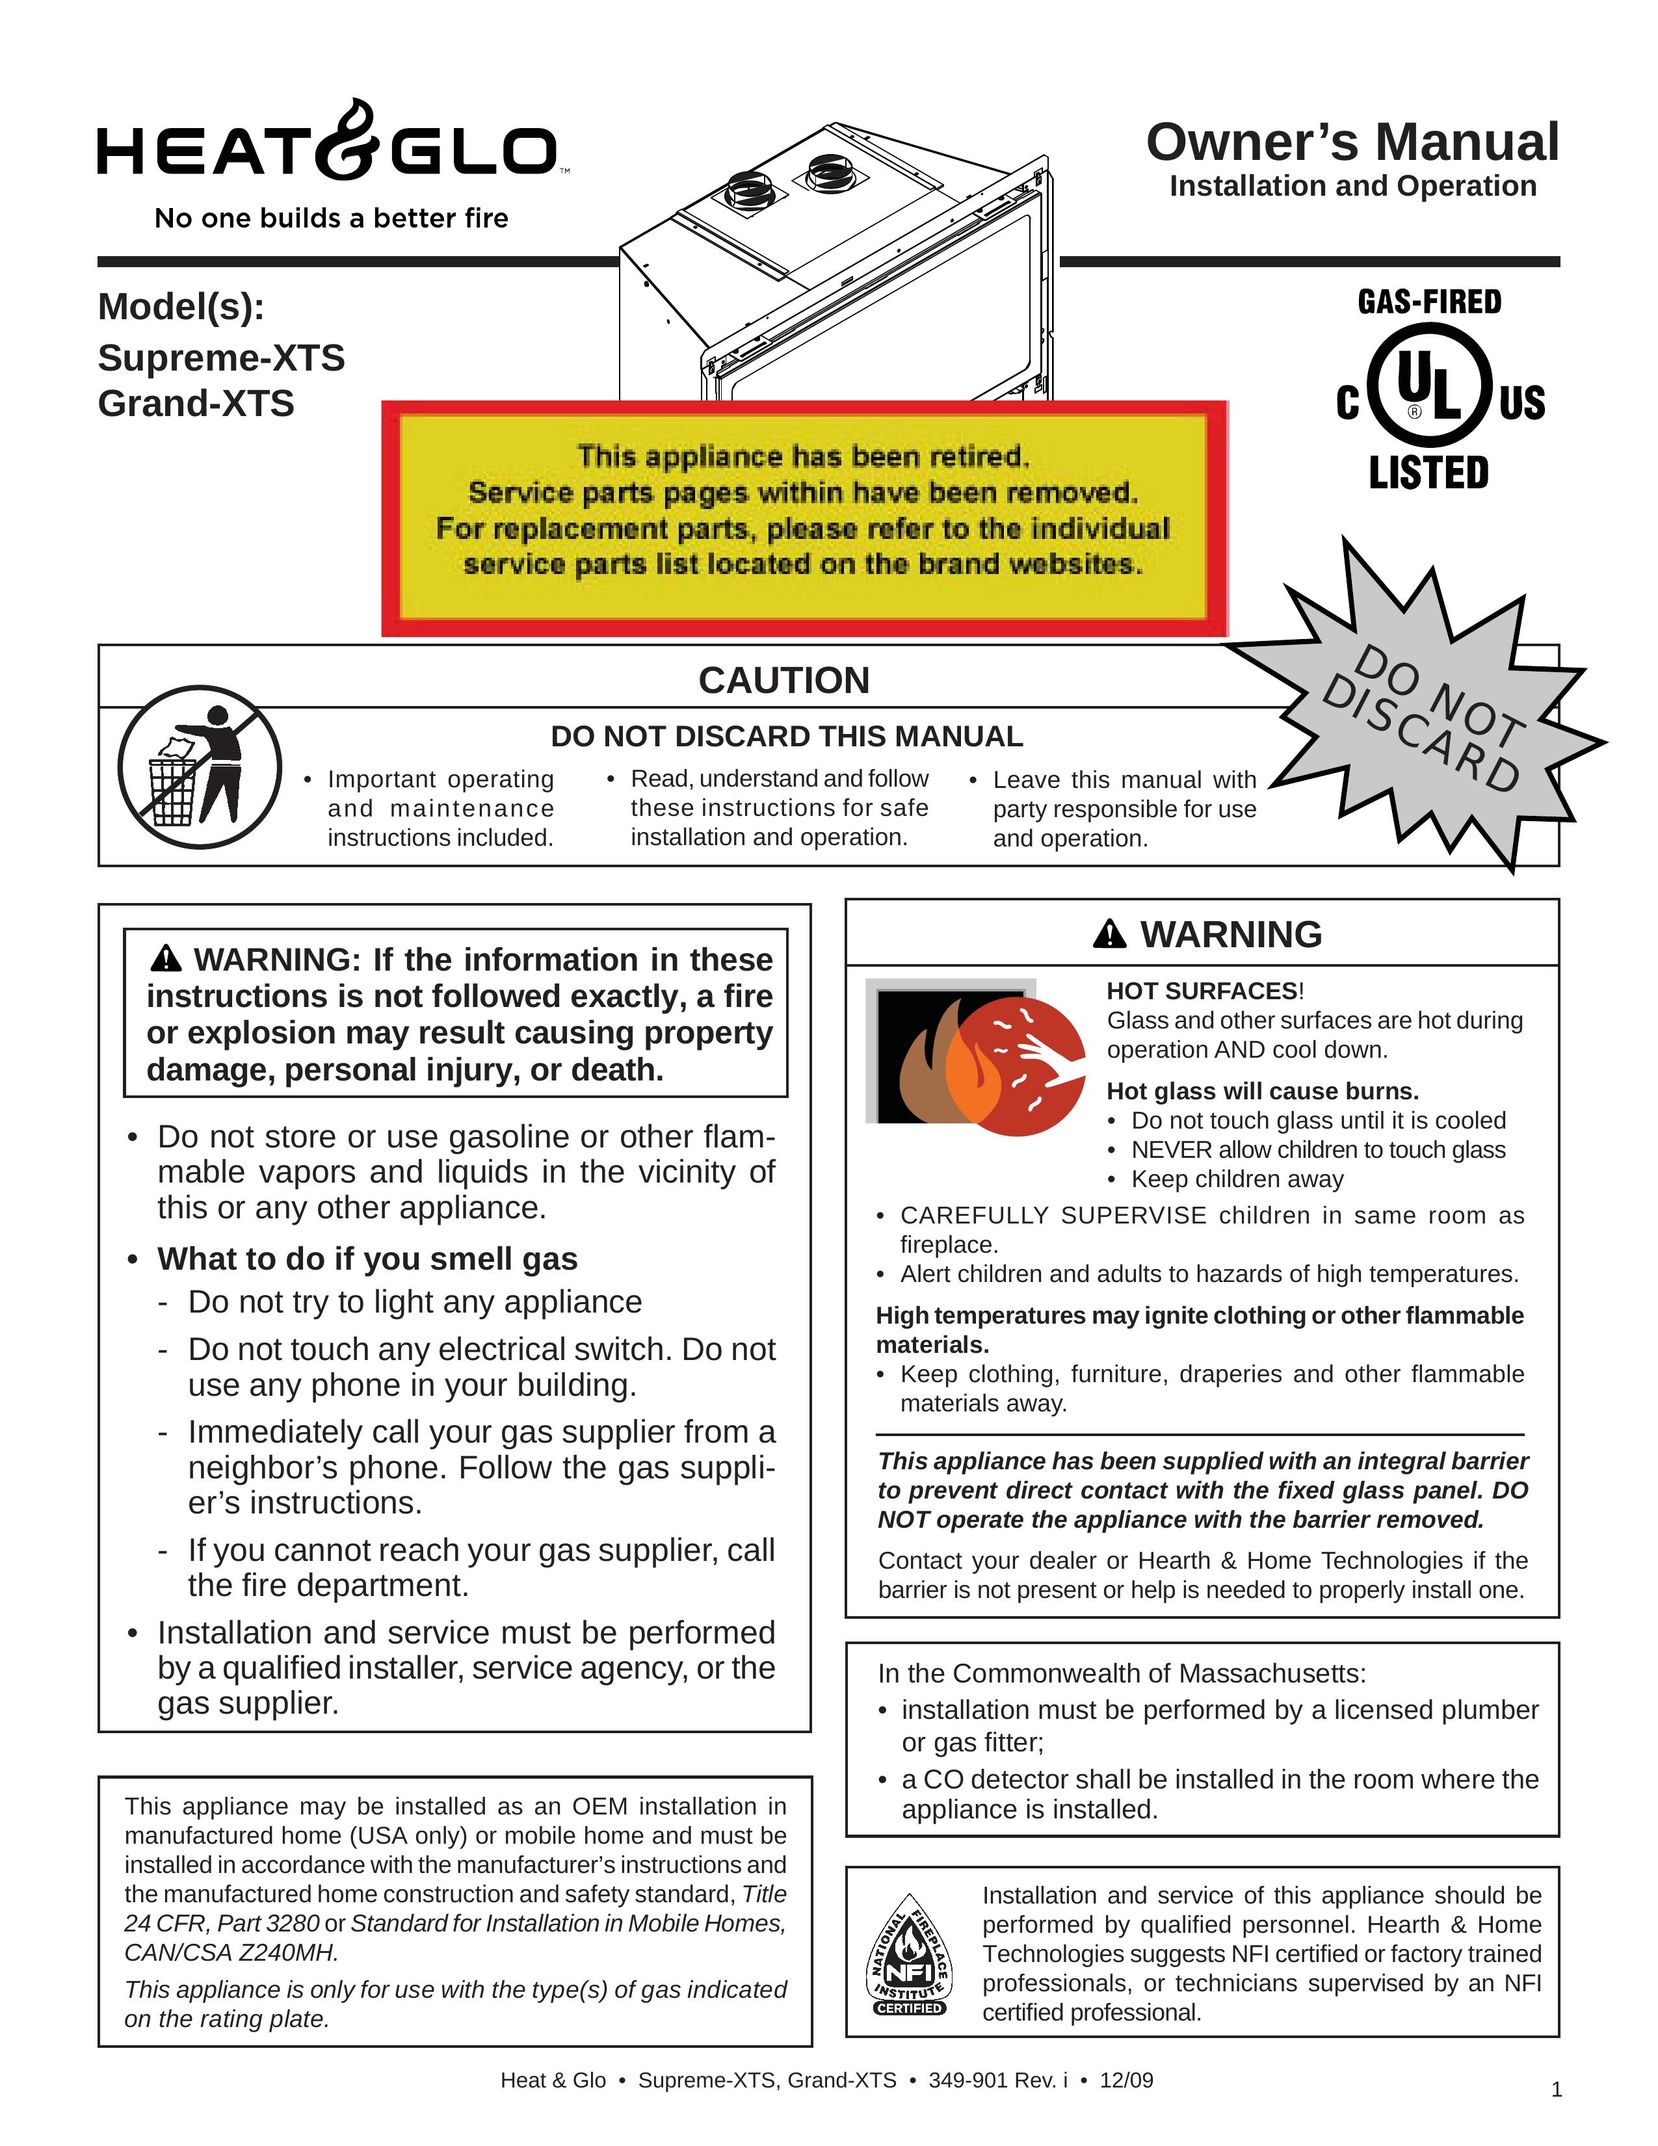 Heat & Glo LifeStyle SUPREME-XTS Boiler User Manual